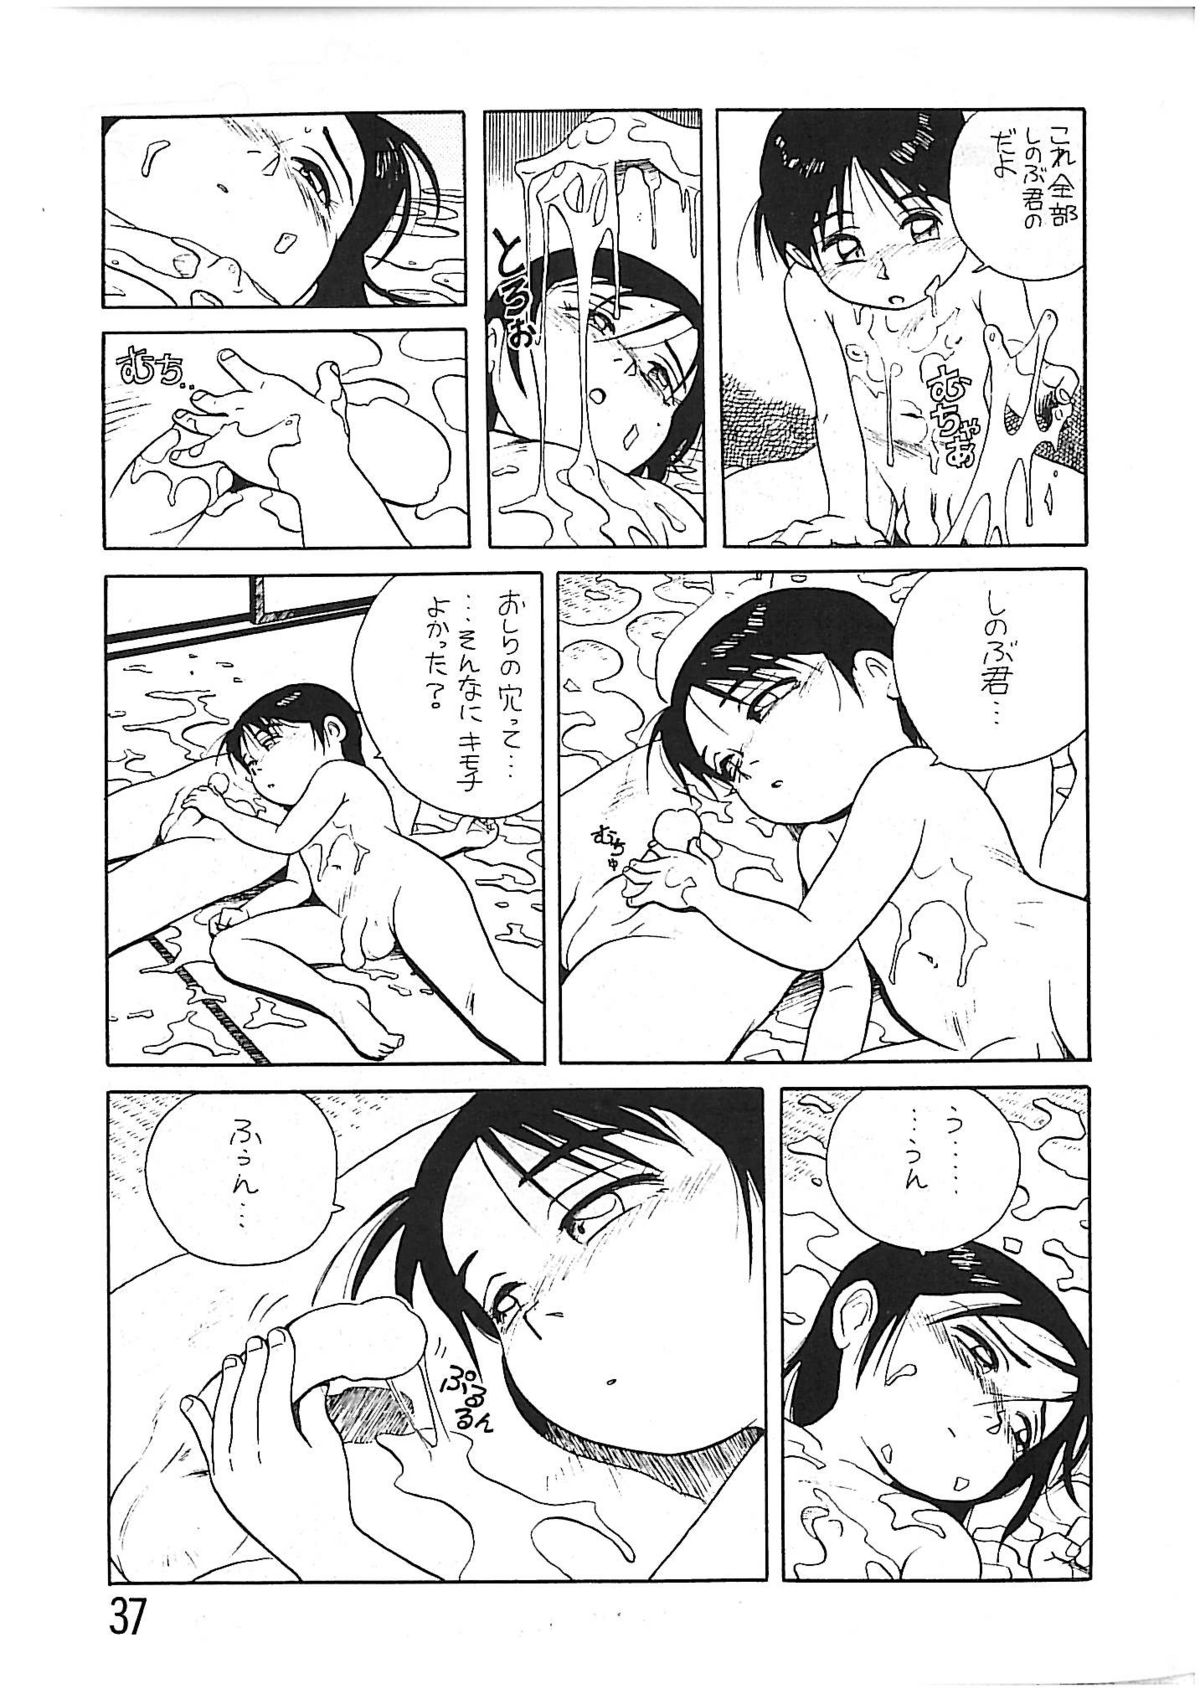 [NEW WORLD ORDER (Anda Daichi)] BOY'S LIFE CORE 2 page 33 full